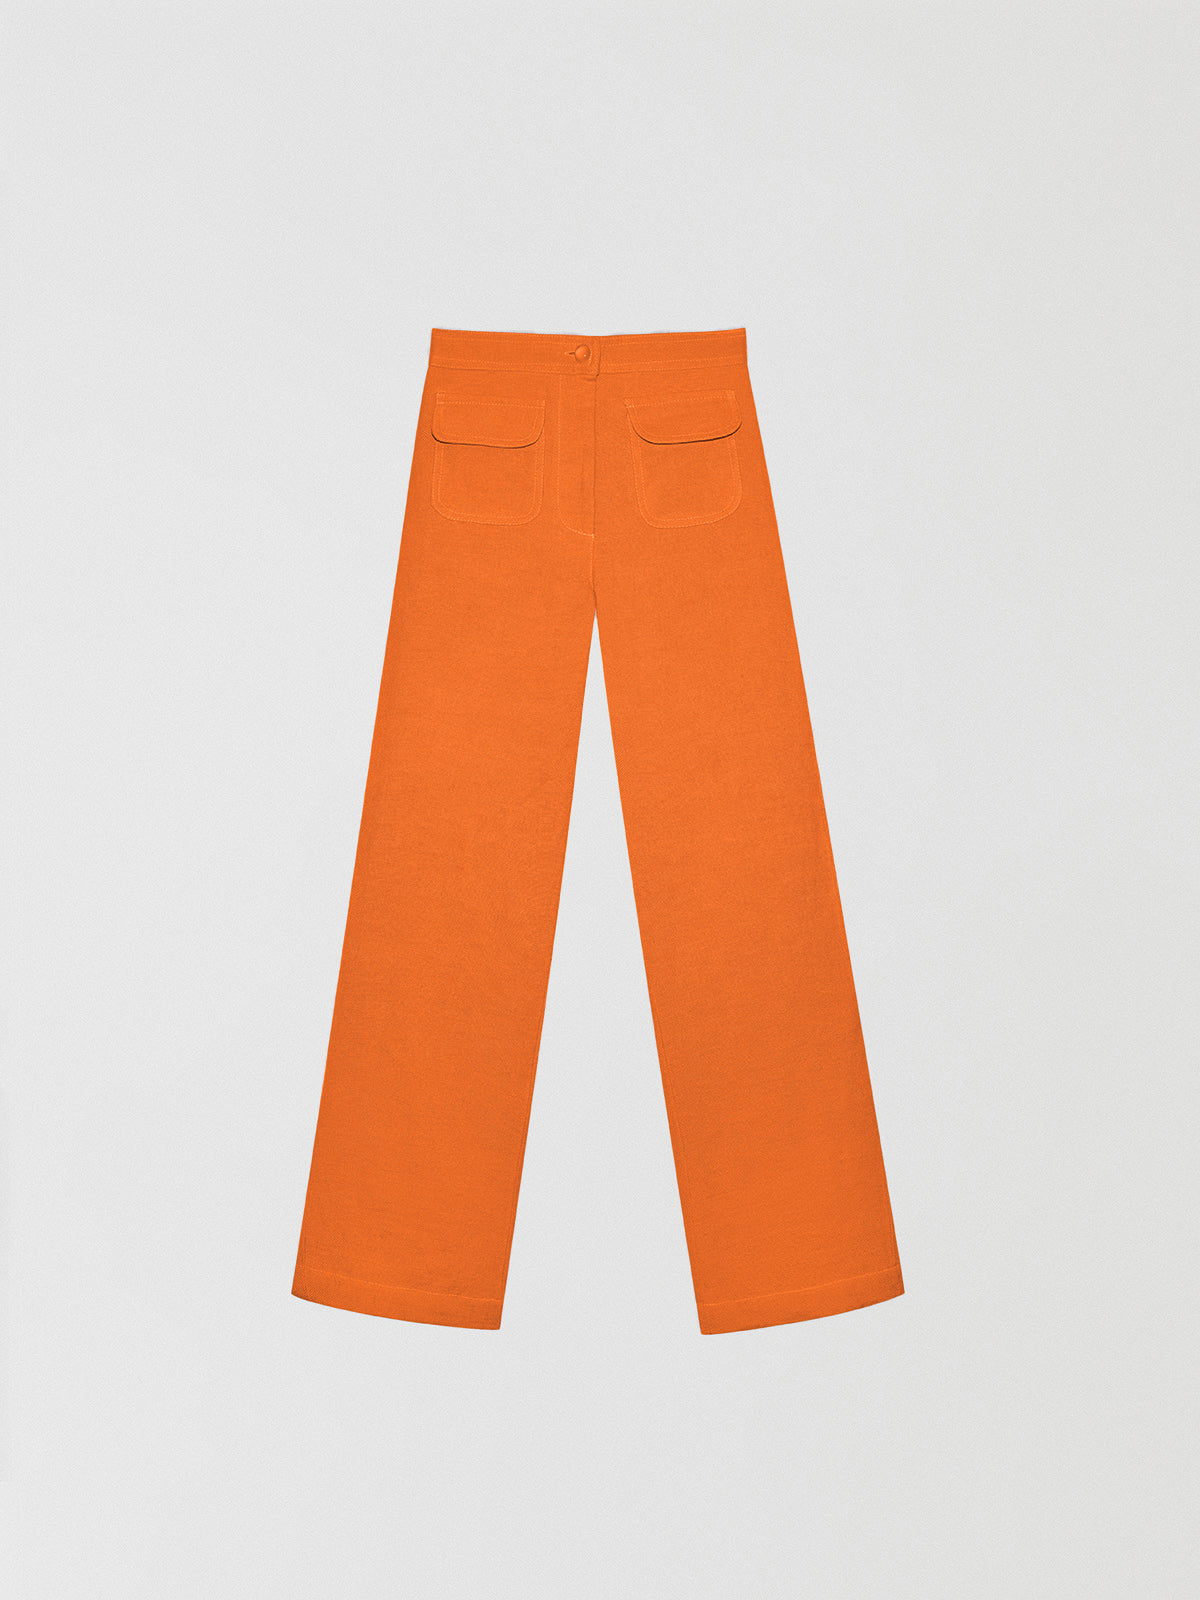 Parasol Pants Orange – La Veste